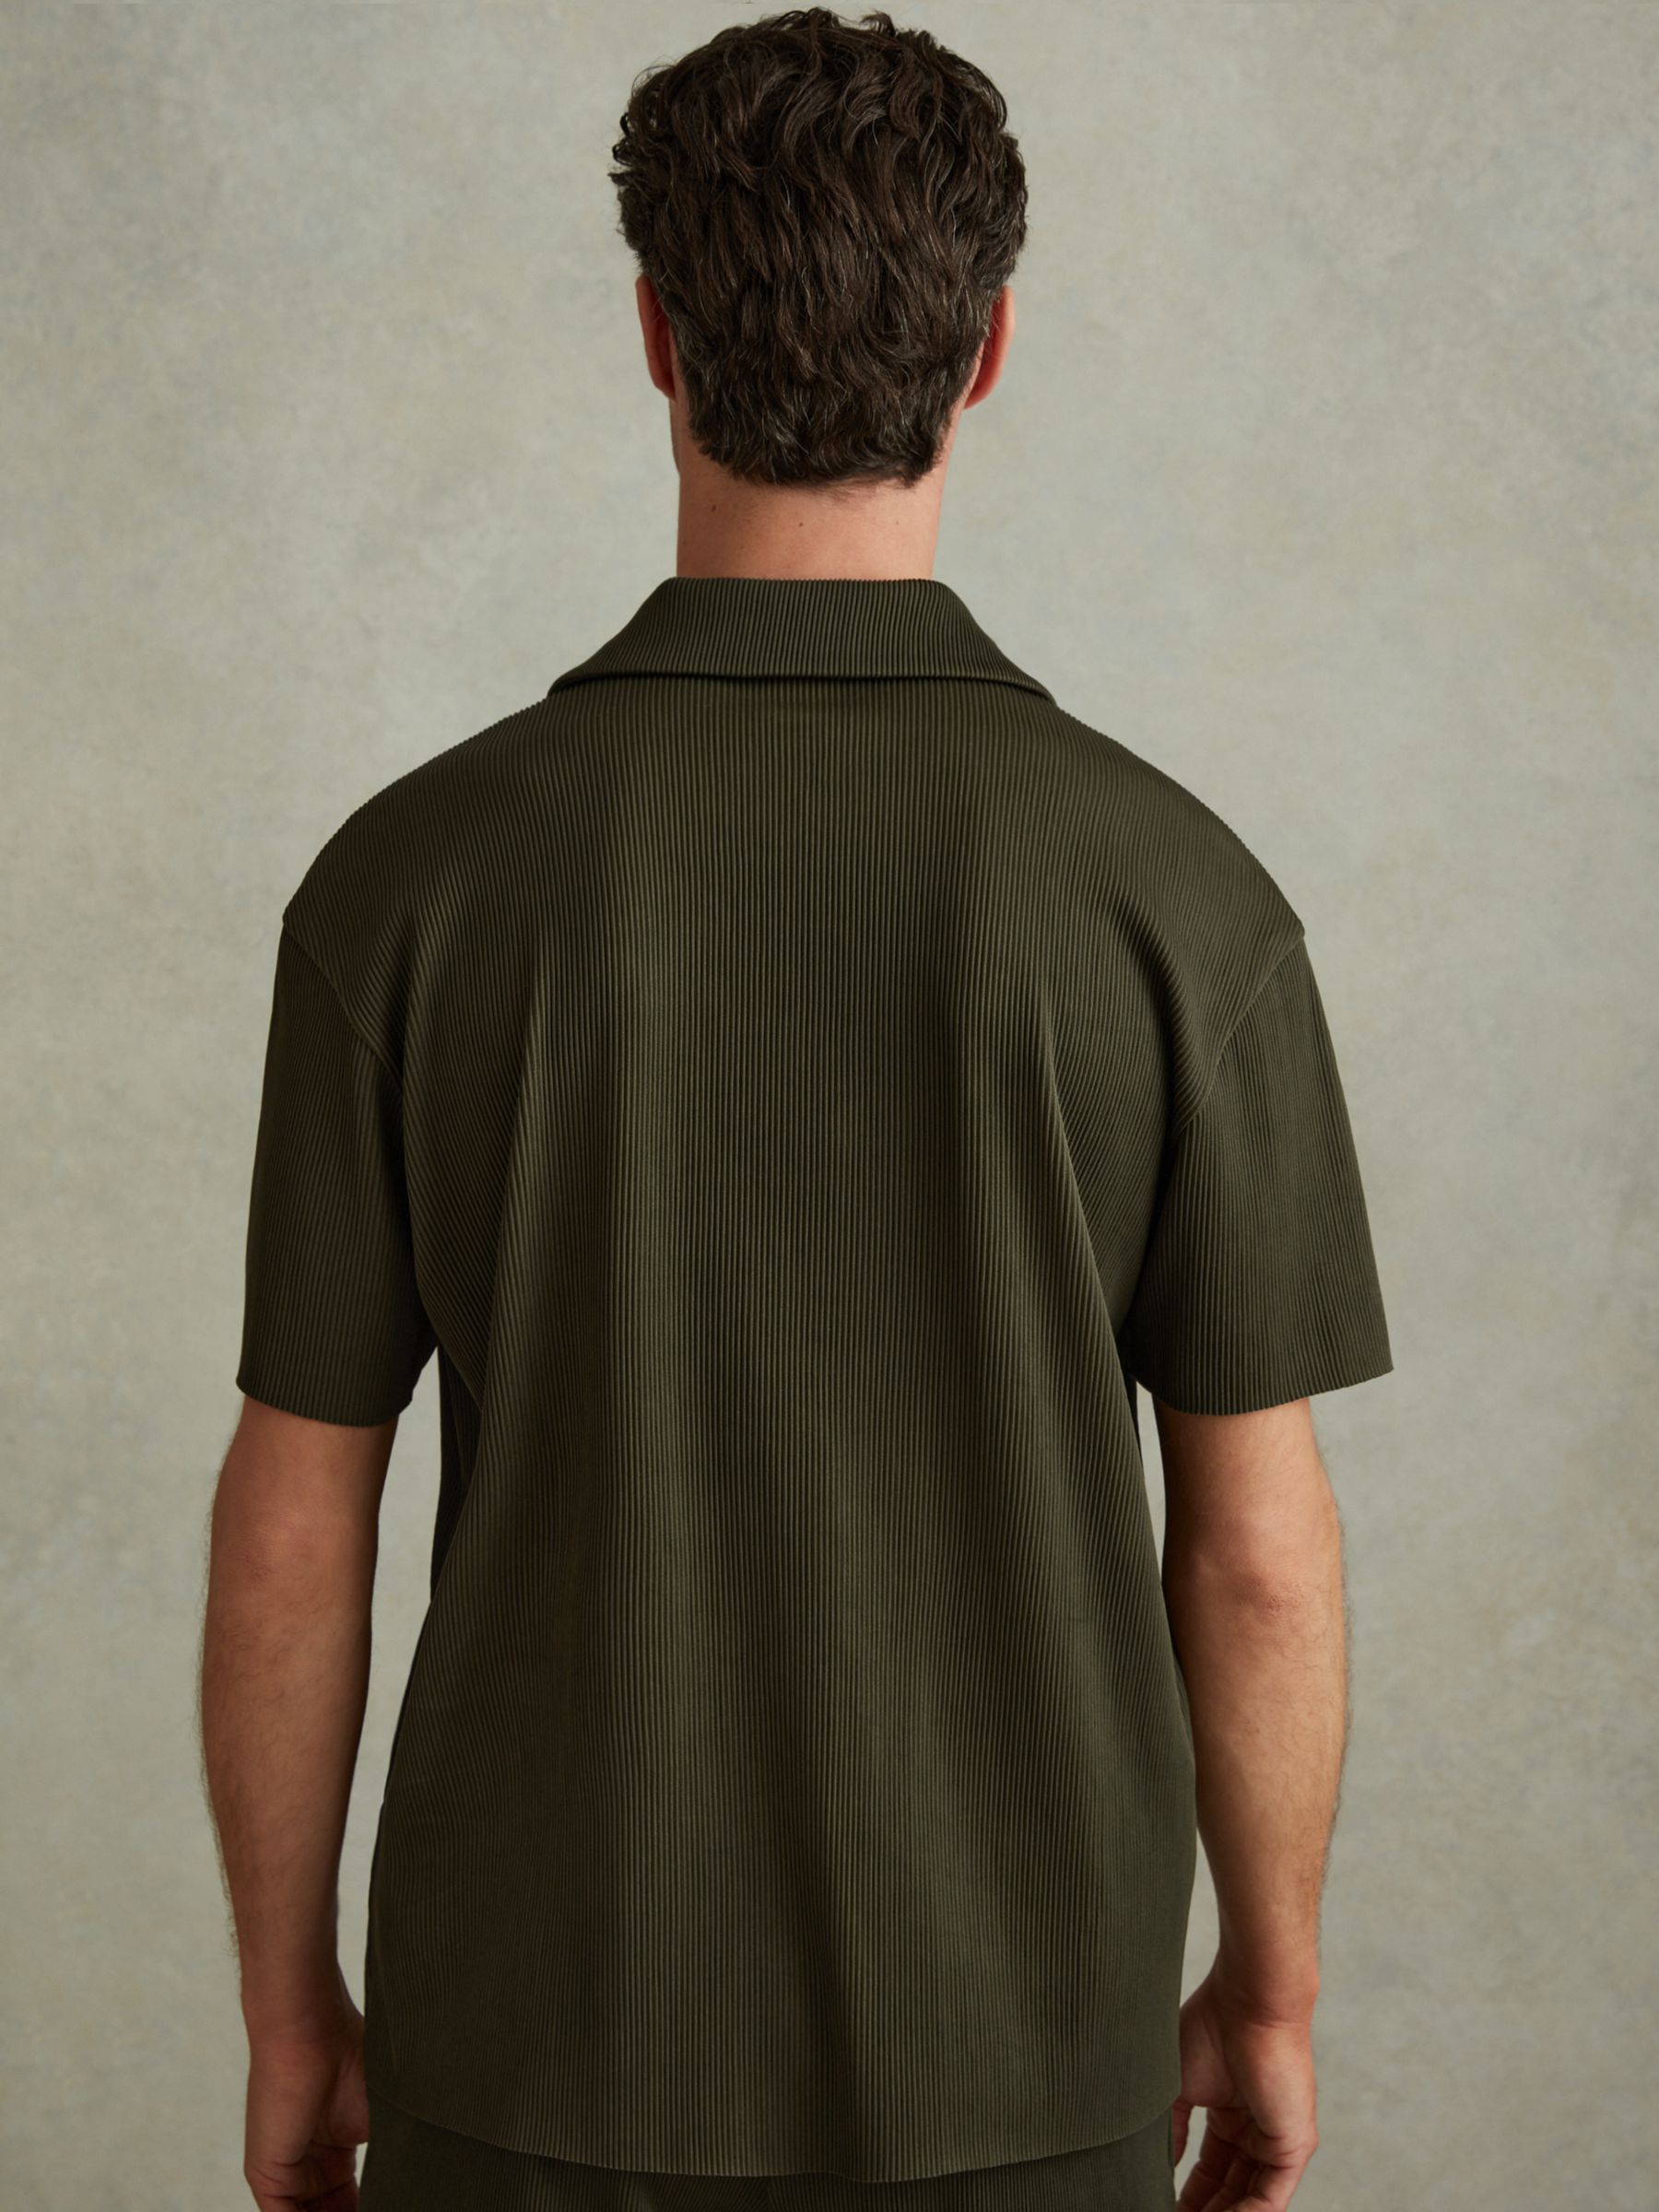 Reiss Chase Short Sleeve Shirt, Green, S